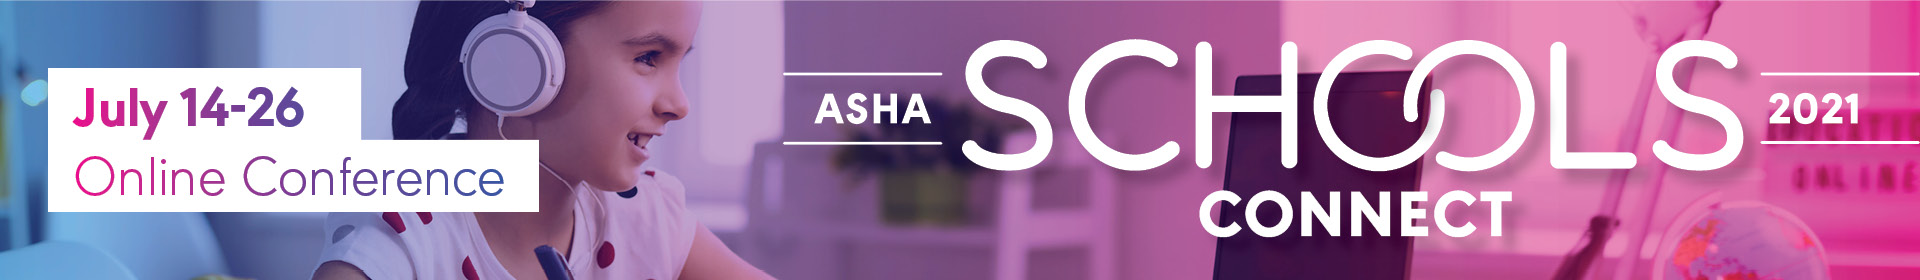 ASHA Schools Connect 2021 Event Banner